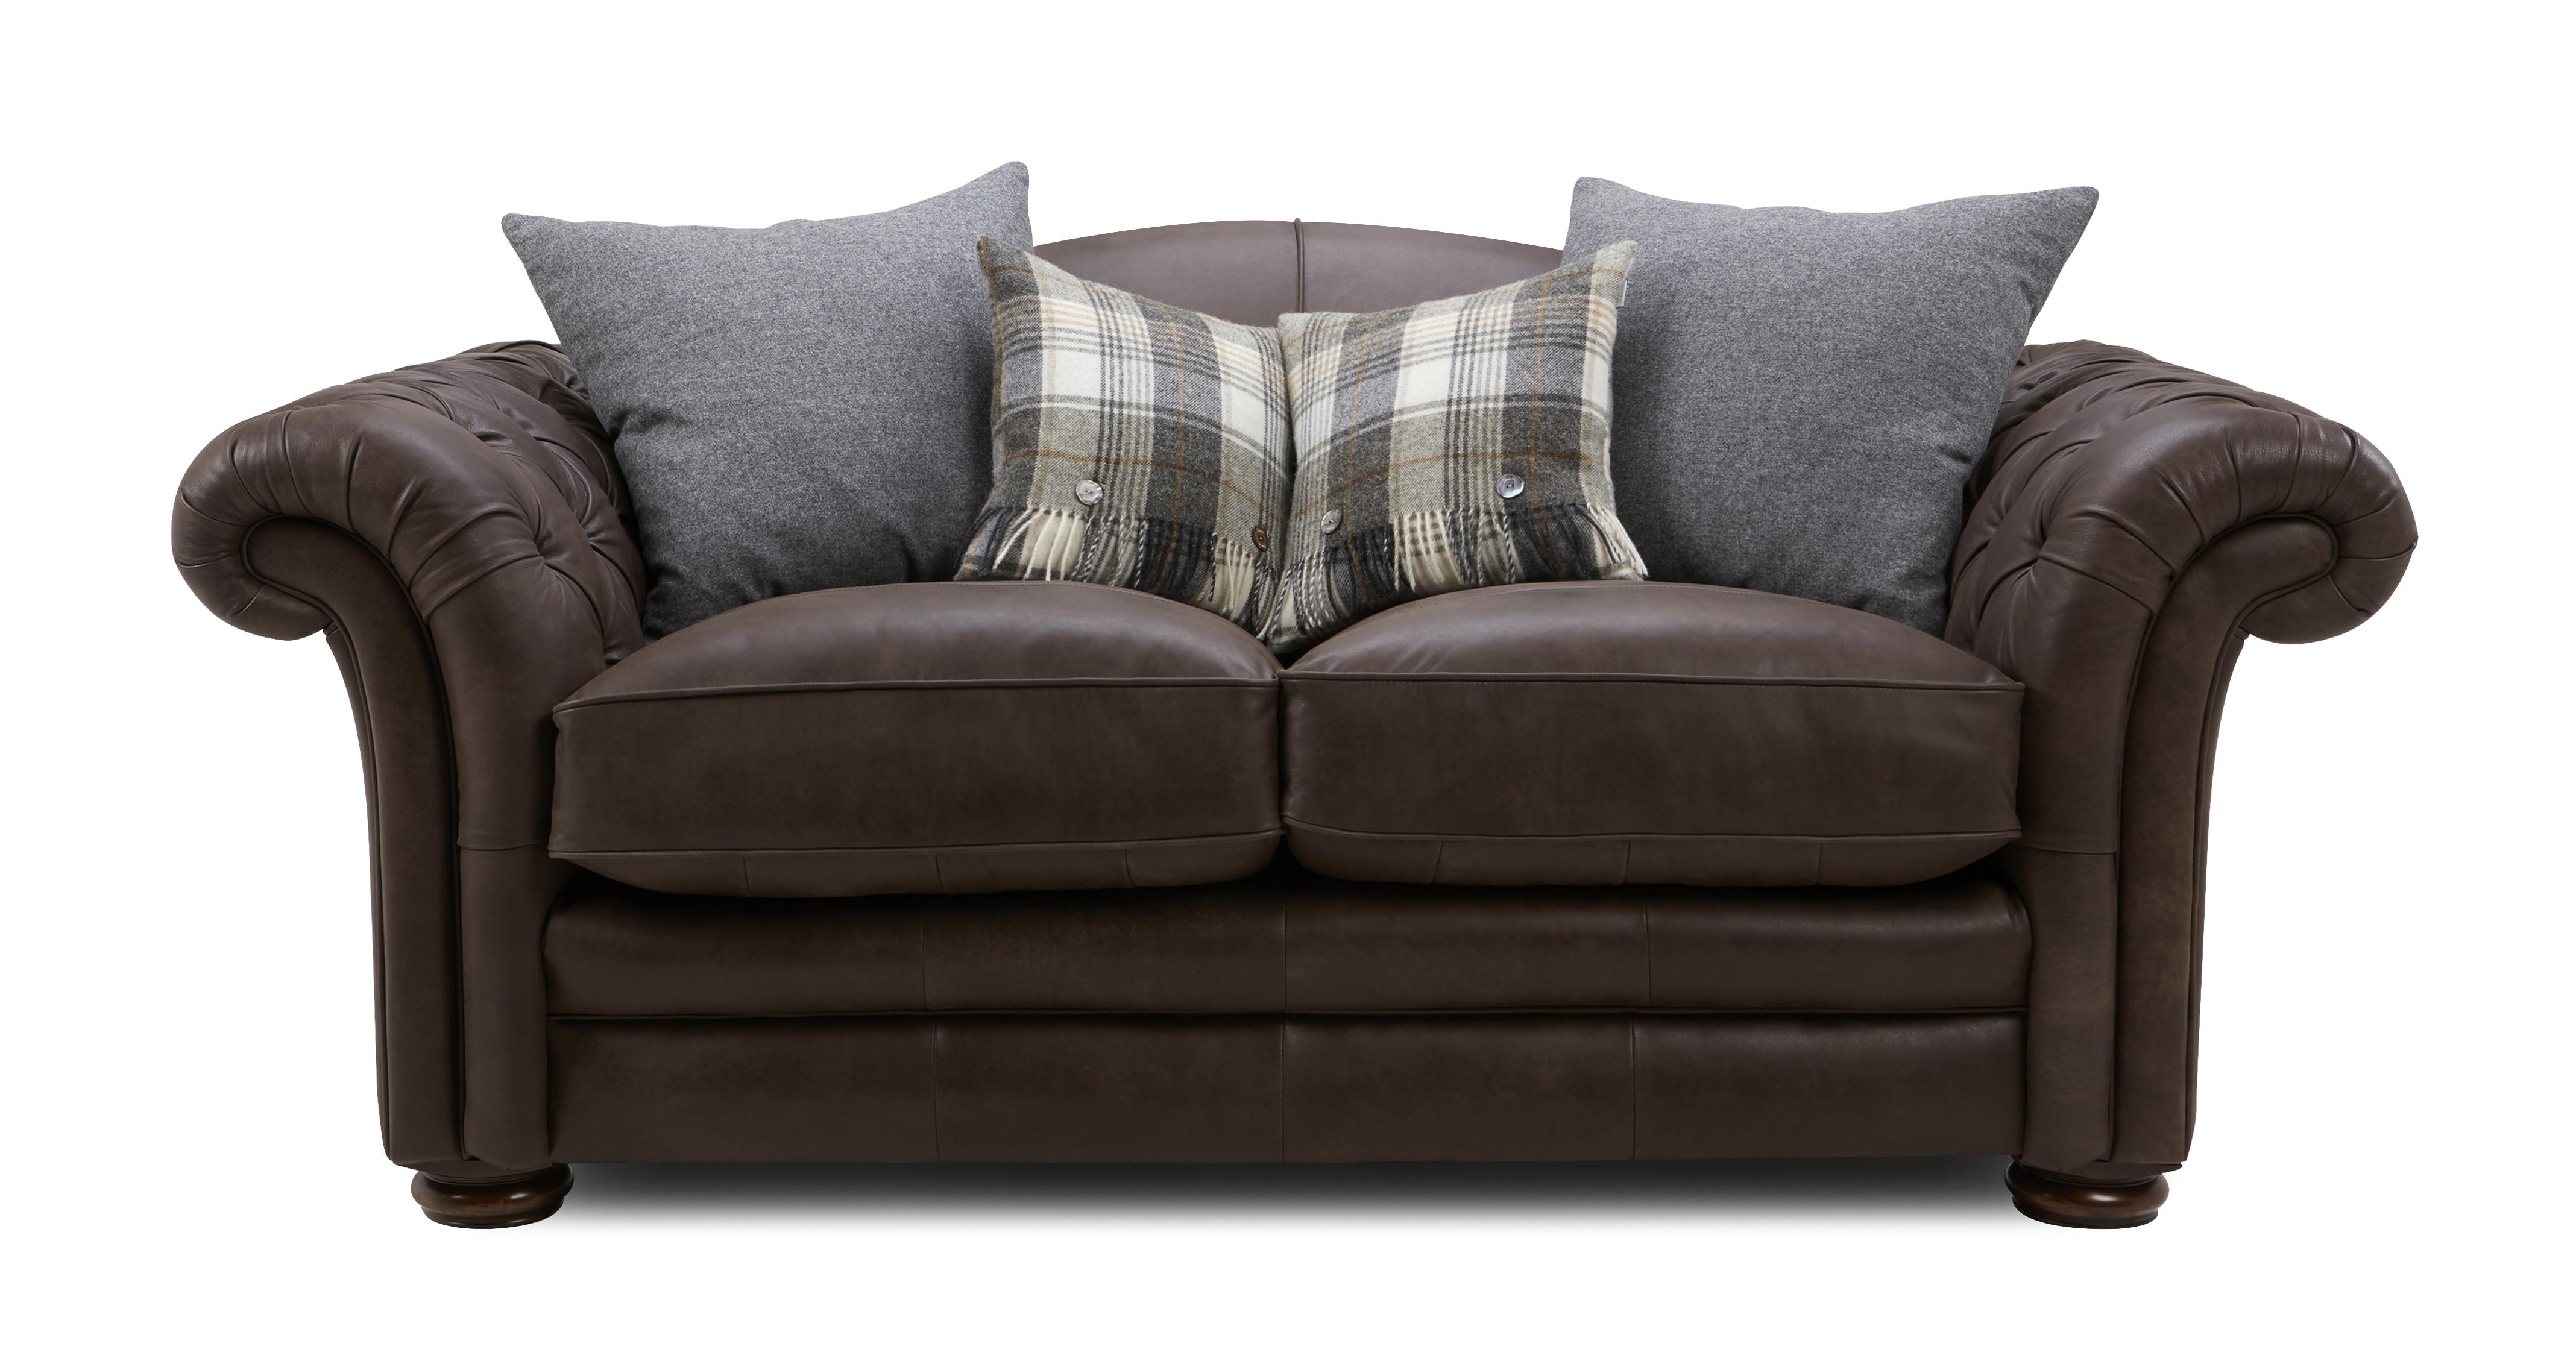 Loch Leven Leather Grand Sofa | DFS